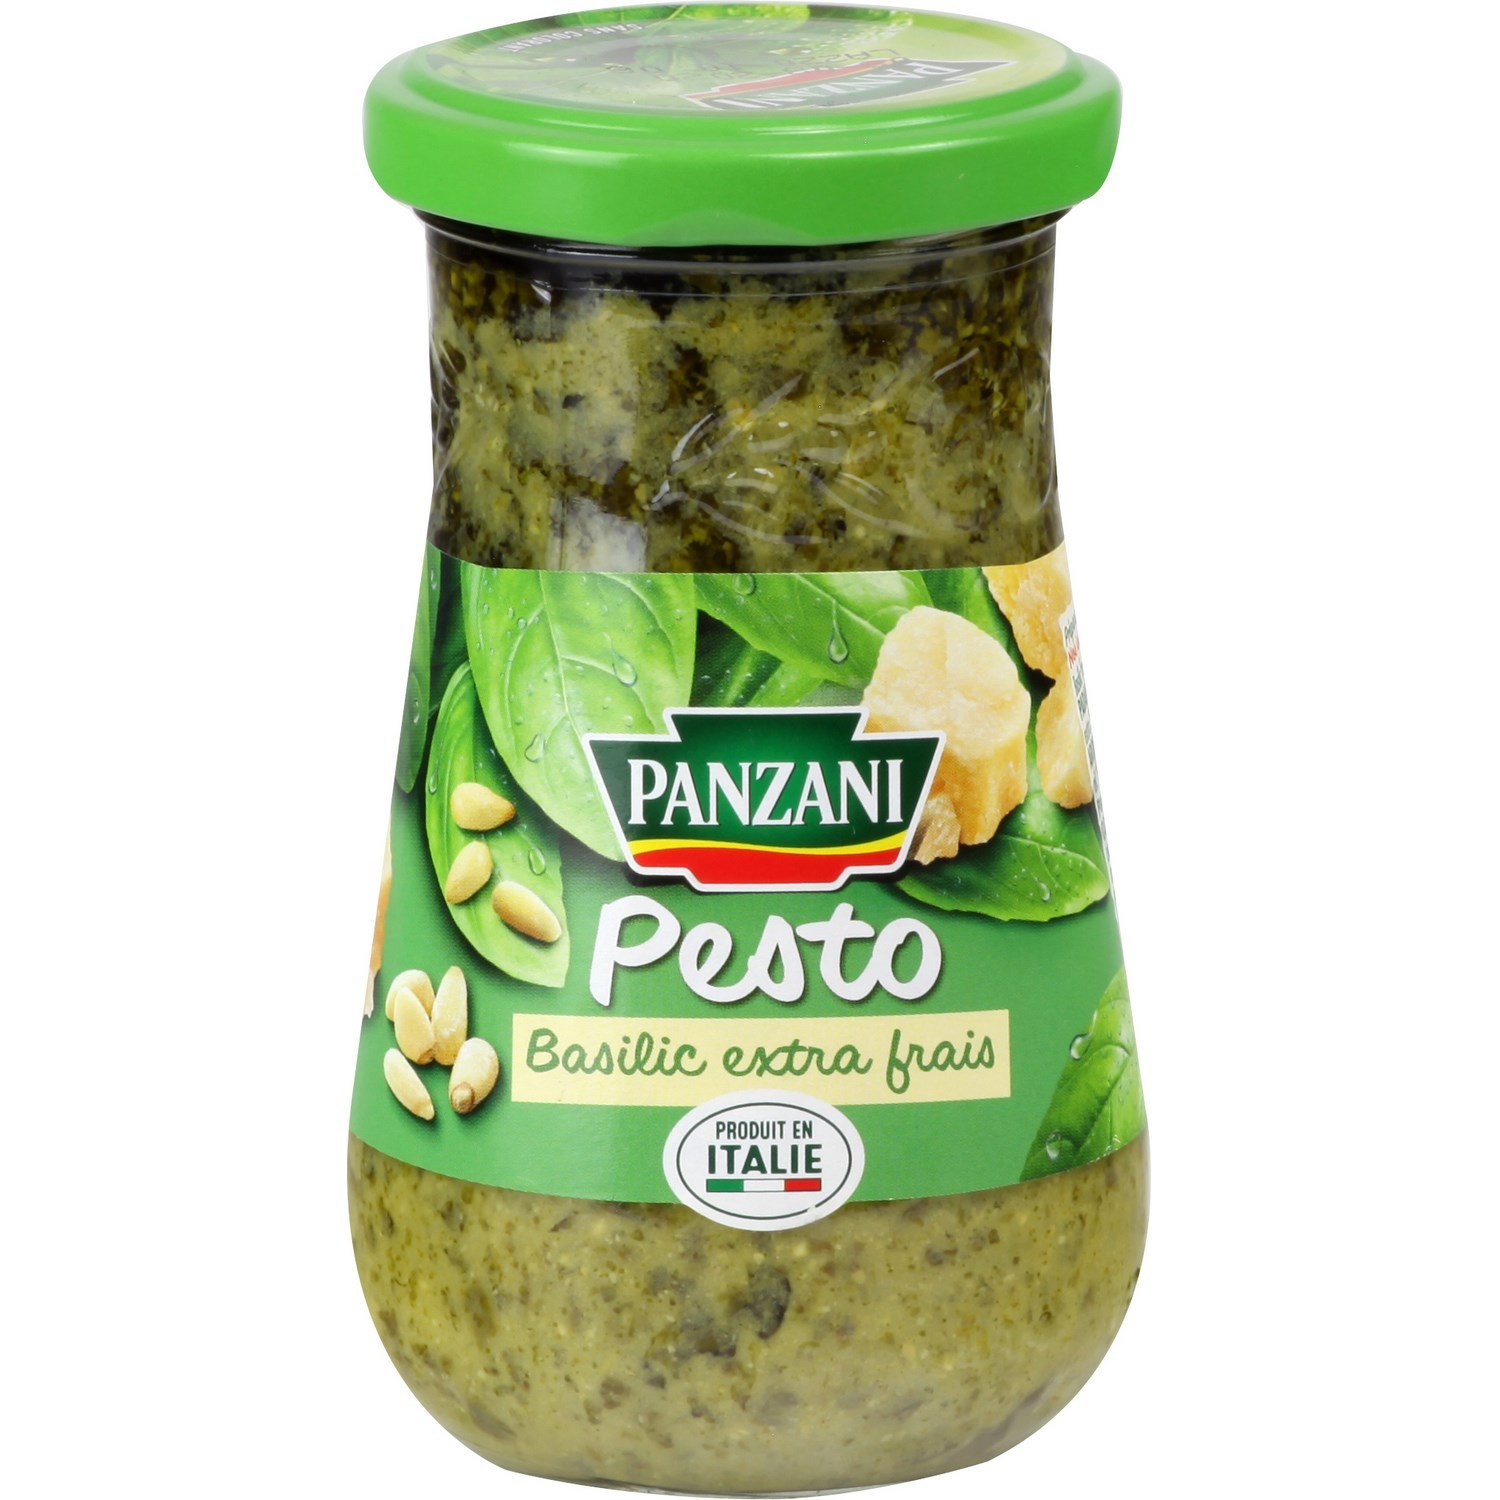 Basil Pesto Sauce Panzani Buy Online My French Grocery,Greek Sandwich Gyro